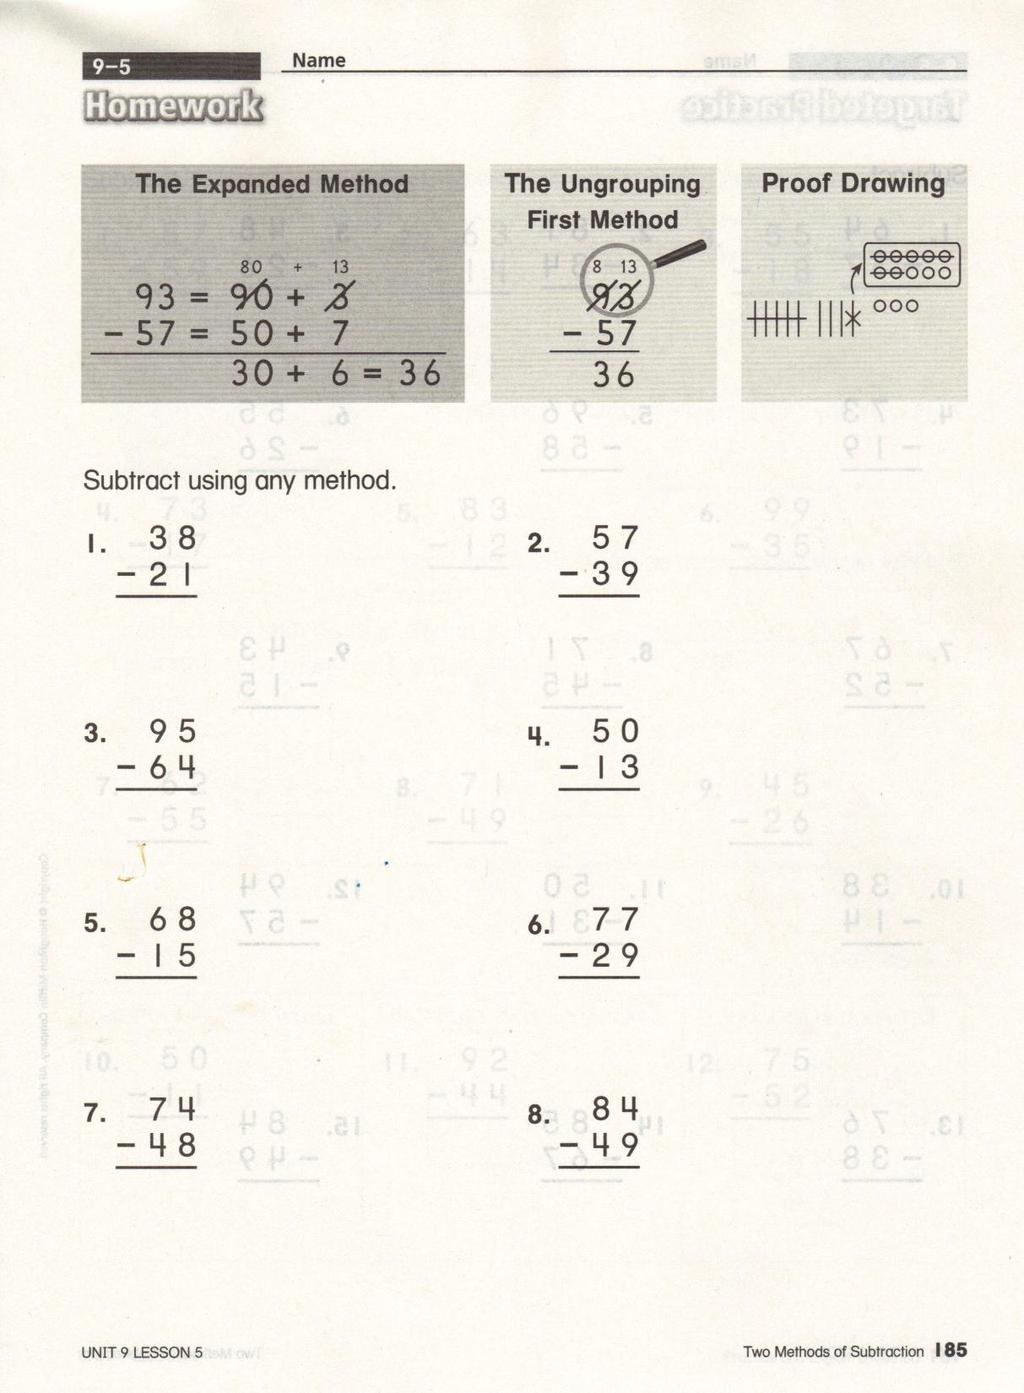 2 nd Grade Homework: Another example of a homework sheet providing several